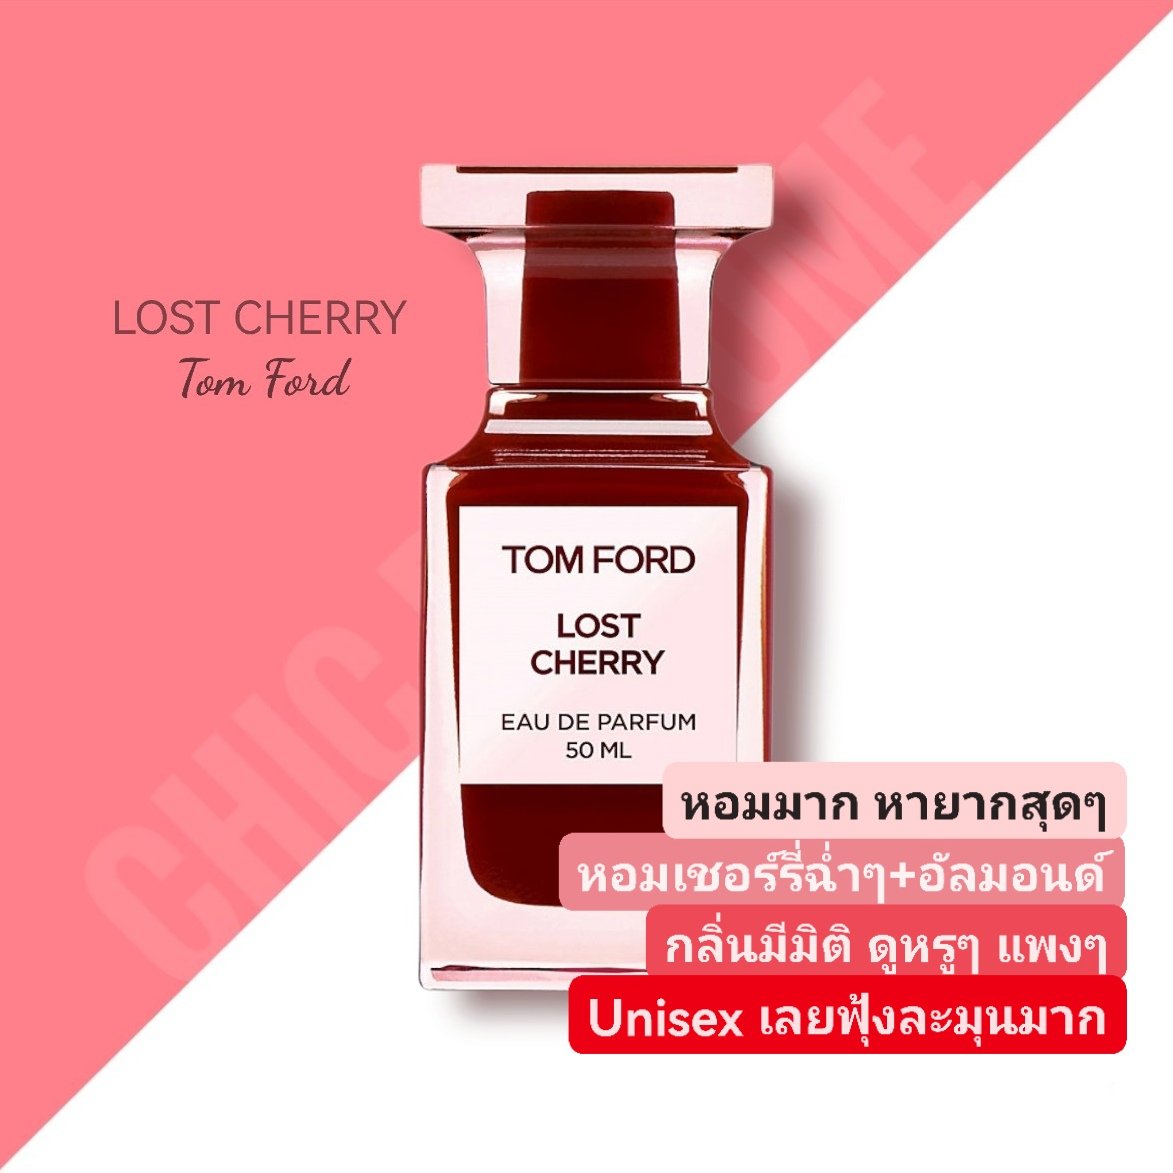 ❤️❤️ปล่อยตัวเด็ด​ ราคาทุนจร้า❤️❤️

กล่อง​ซีล​ #TOMFORD EDP 50ML 

- Lost Cherry #949O
- Lost Cherry กล่องขายไม่ซีล​ #929O
- F…….FABULOUS #939O

# ส่ง​ฟรี​ (ราคา​เต็ม​ขวดละ #139OO) 

#TOMFORDLostCherry
#TOMFORDFABULOUS
#ของใหม่ไม่เคยถูกฉีด
#น้ำหอมแท้ #รีวิวน้ำหอม